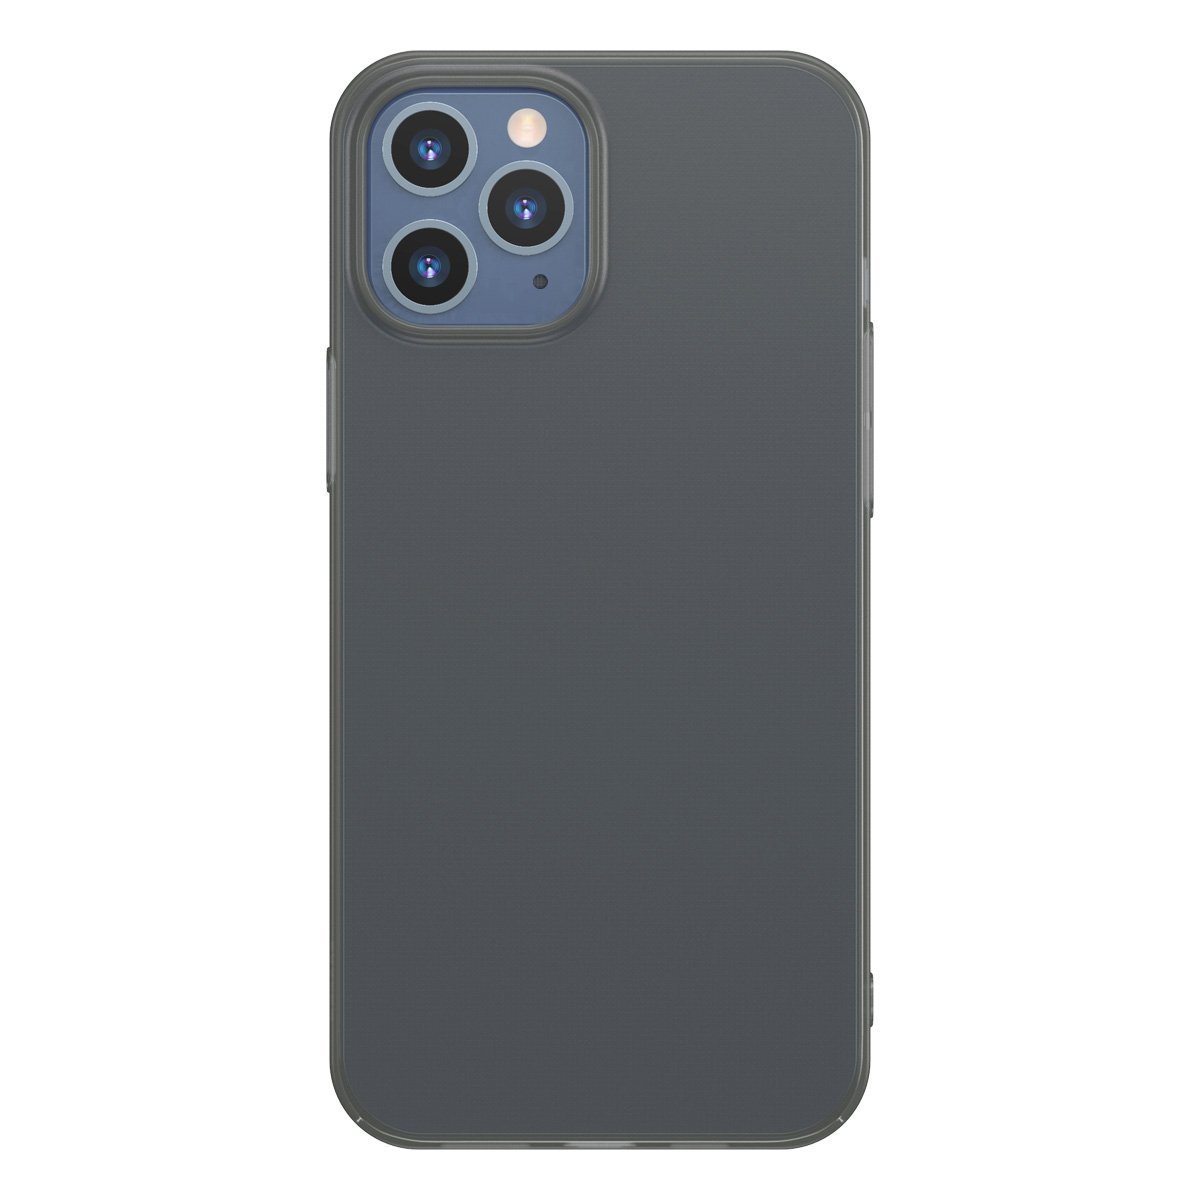 Husa Apple iPhone 12 Pro Max, Baseus Comfort Case, Negru, 6.7 inch 6.7 imagine Black Friday 2021